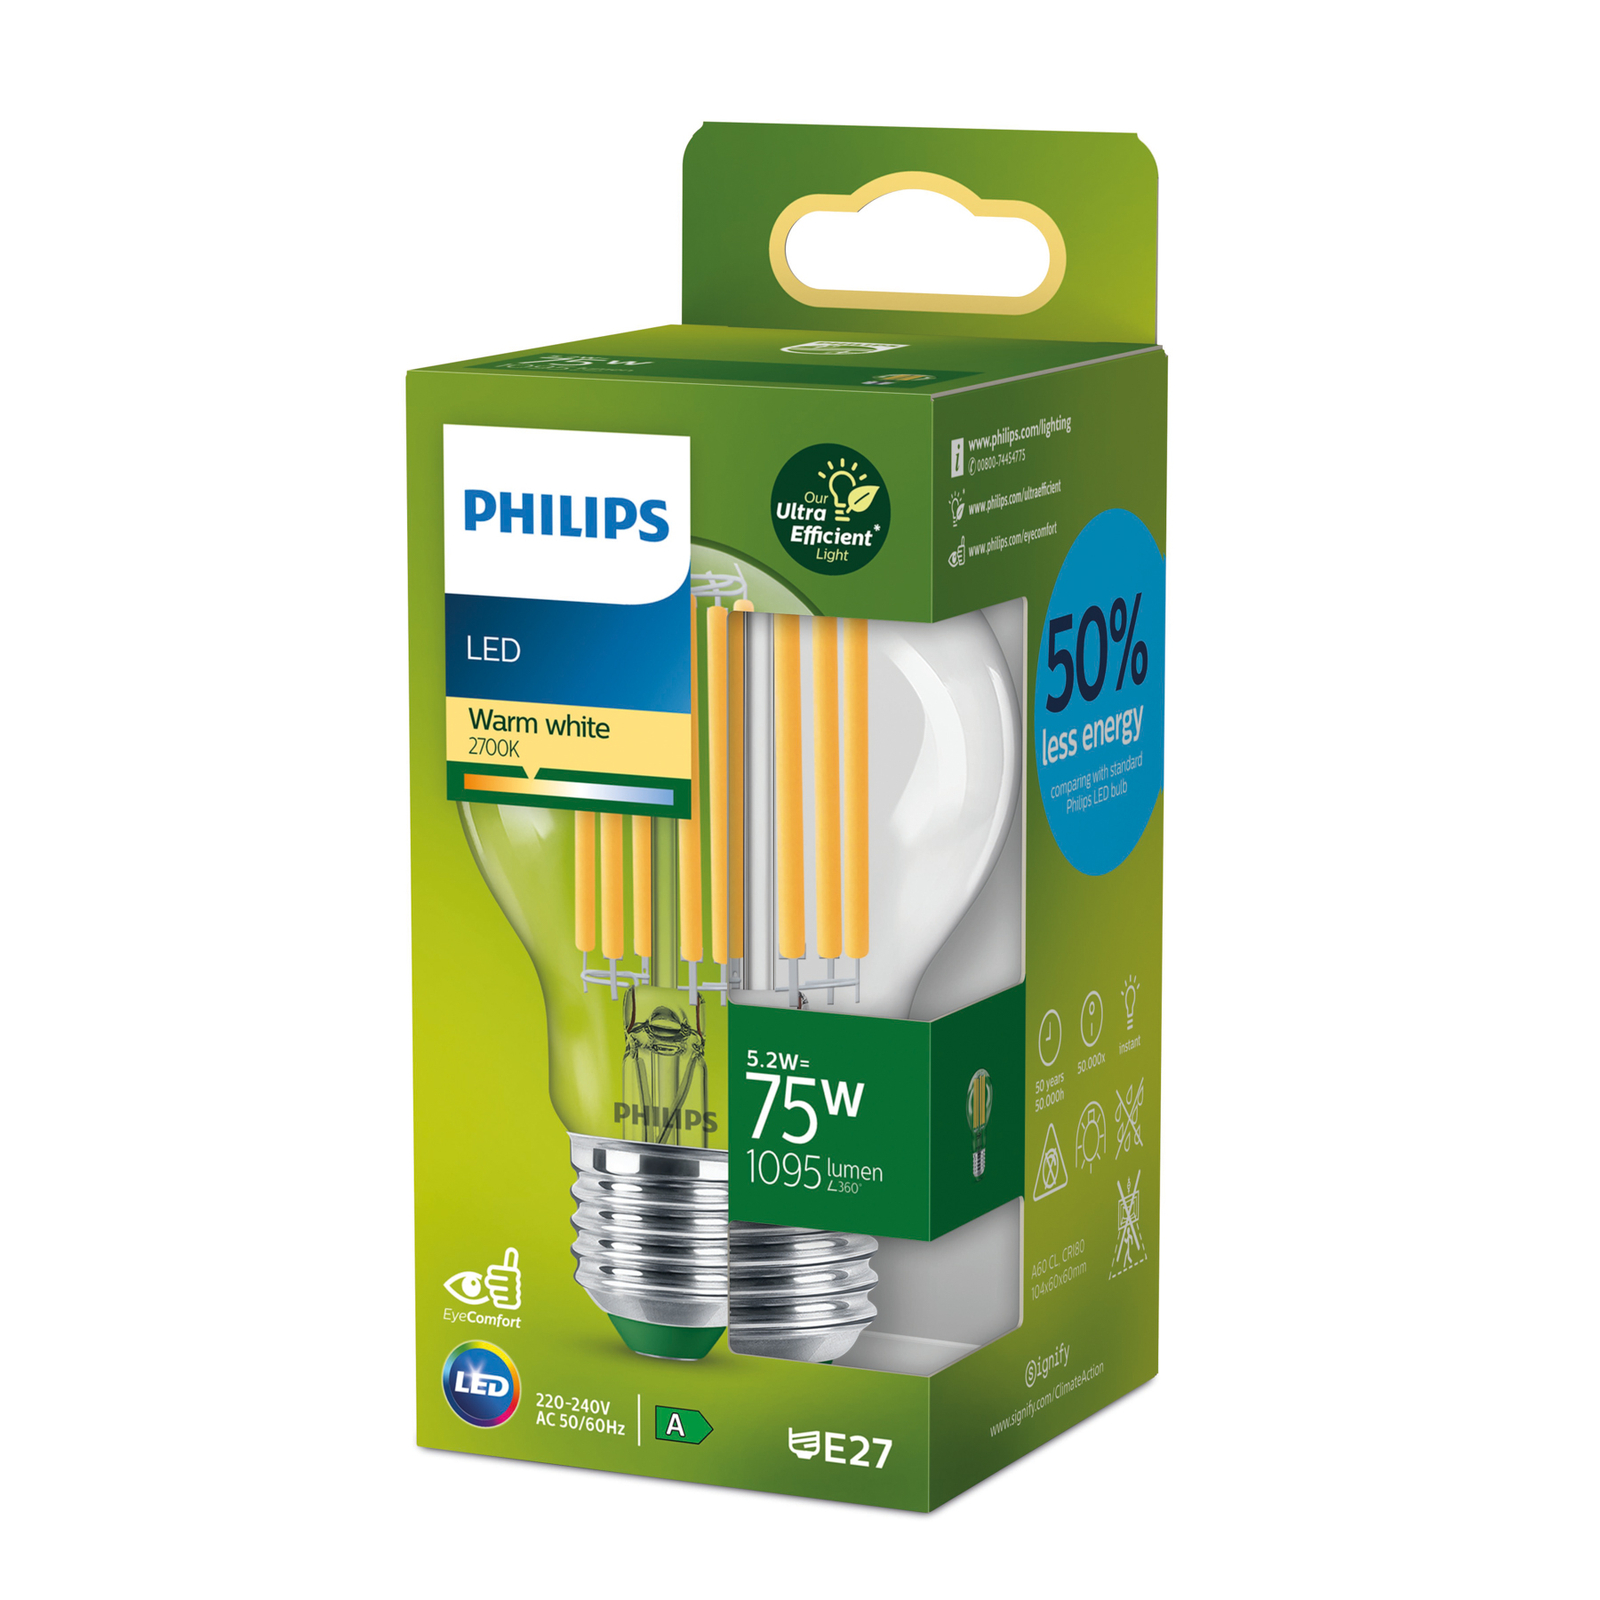 Philips E27 żarówka LED A60 5,2W 1095lm 2 700 K